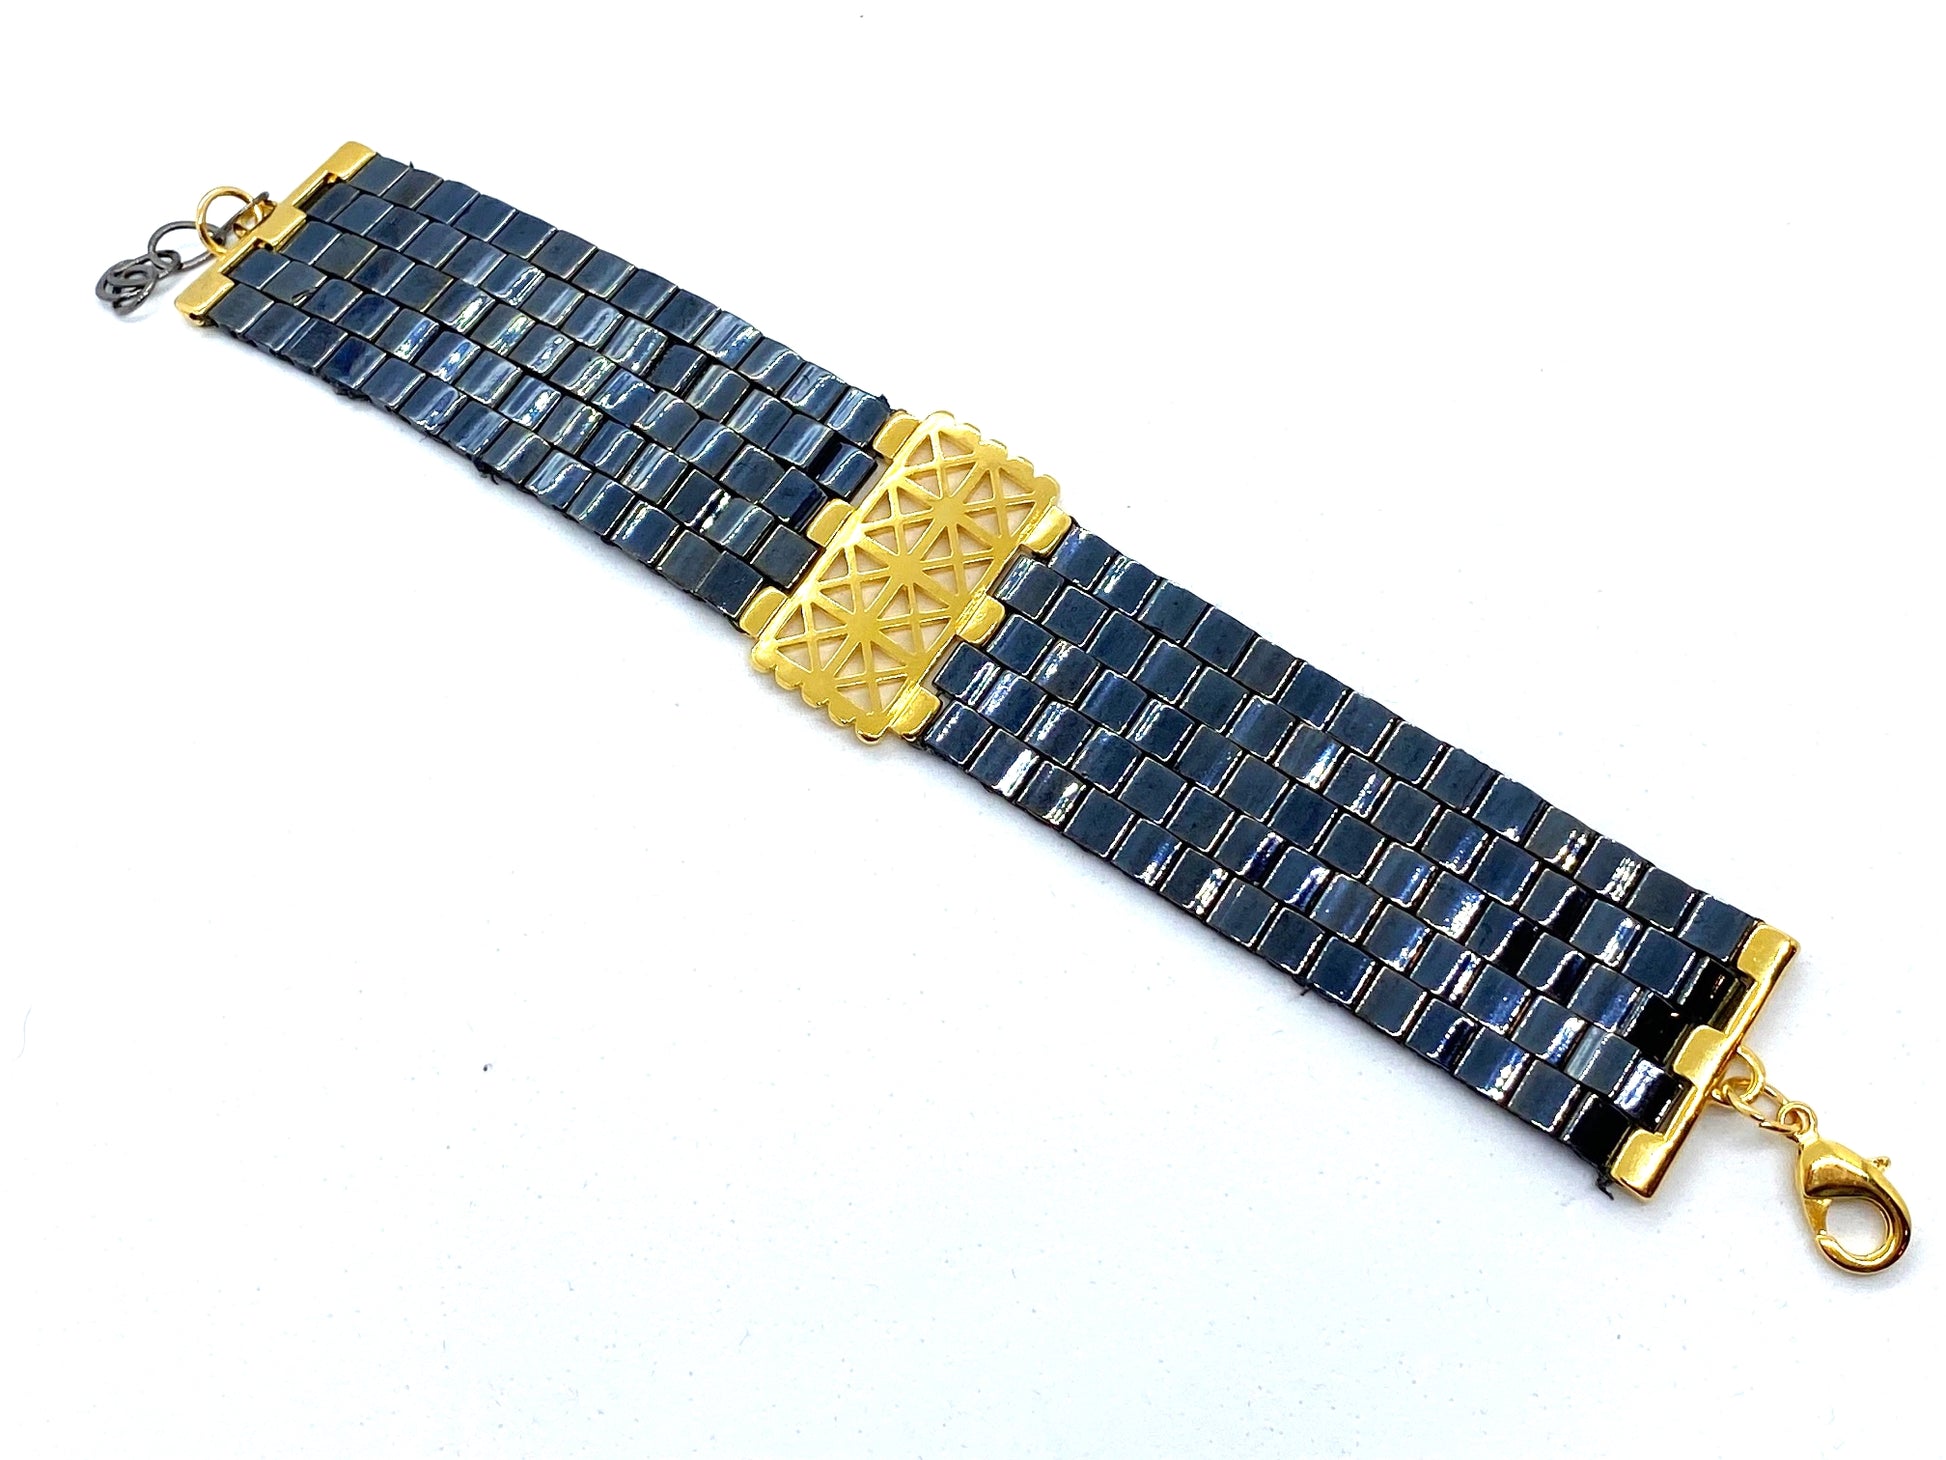 Two Tone Handsewn Bracelet - Emmis Jewelry, Bracelets, [product_color]